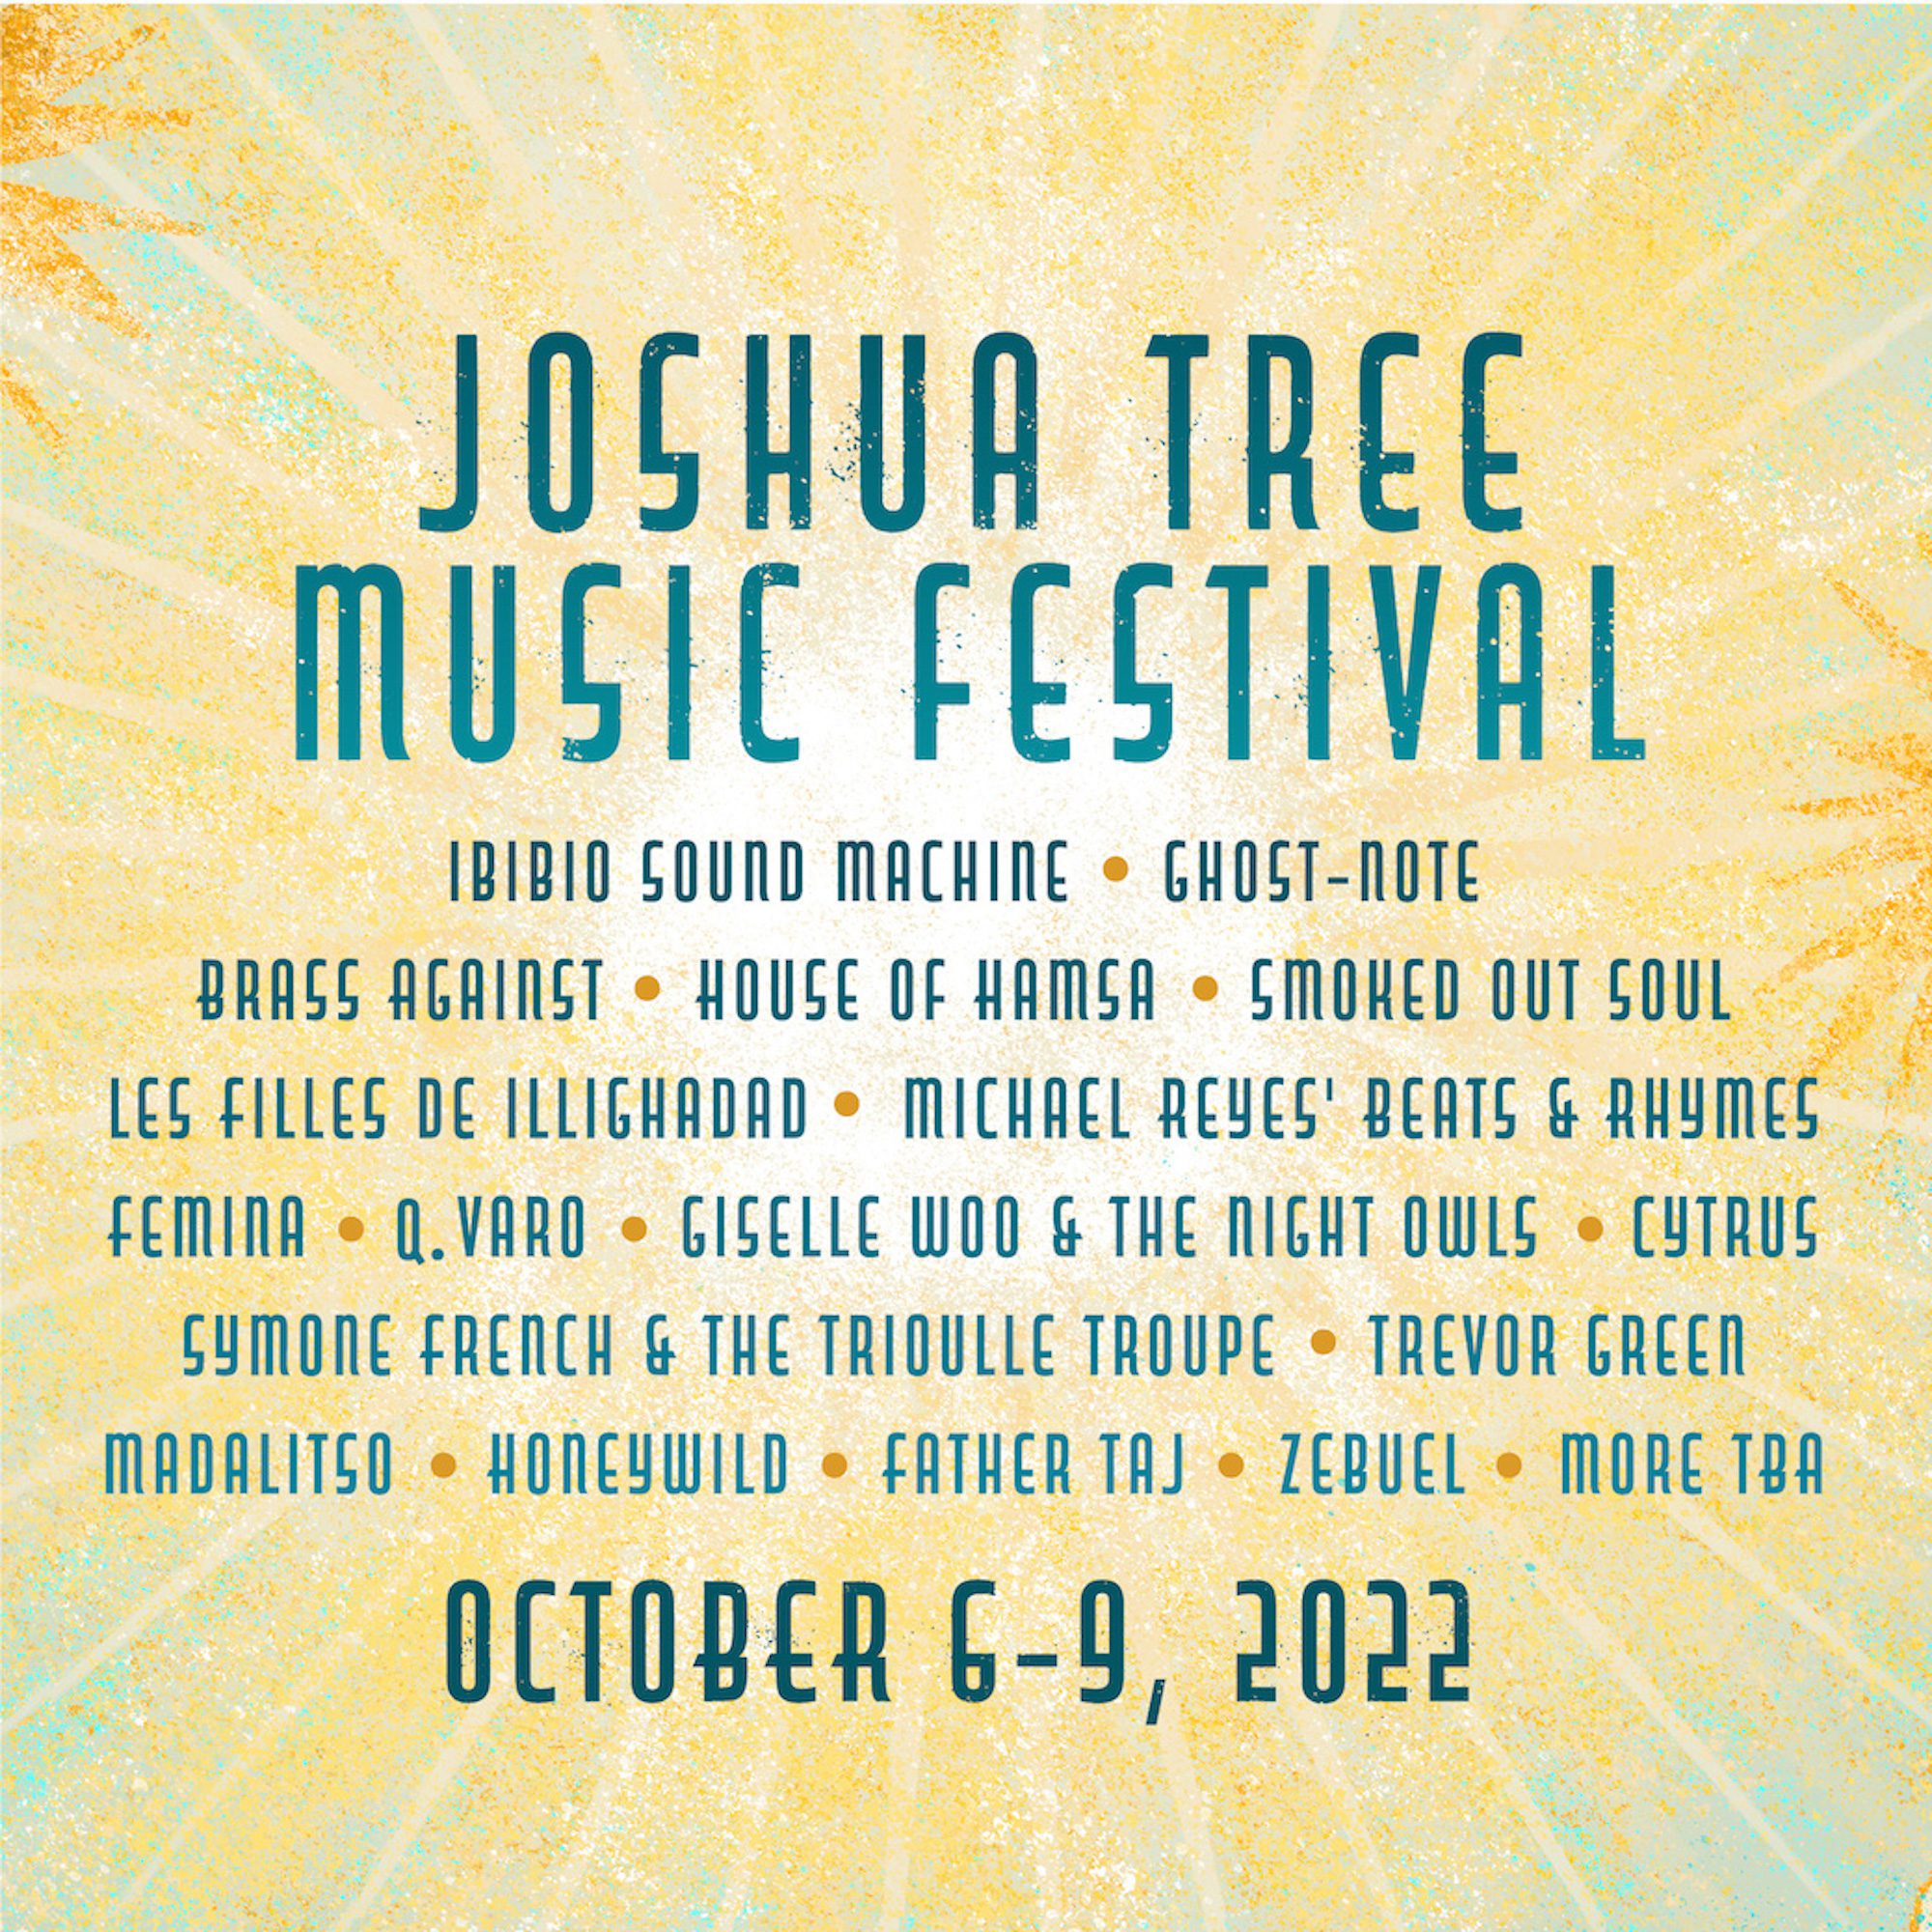 Joshua Tree Music Festival